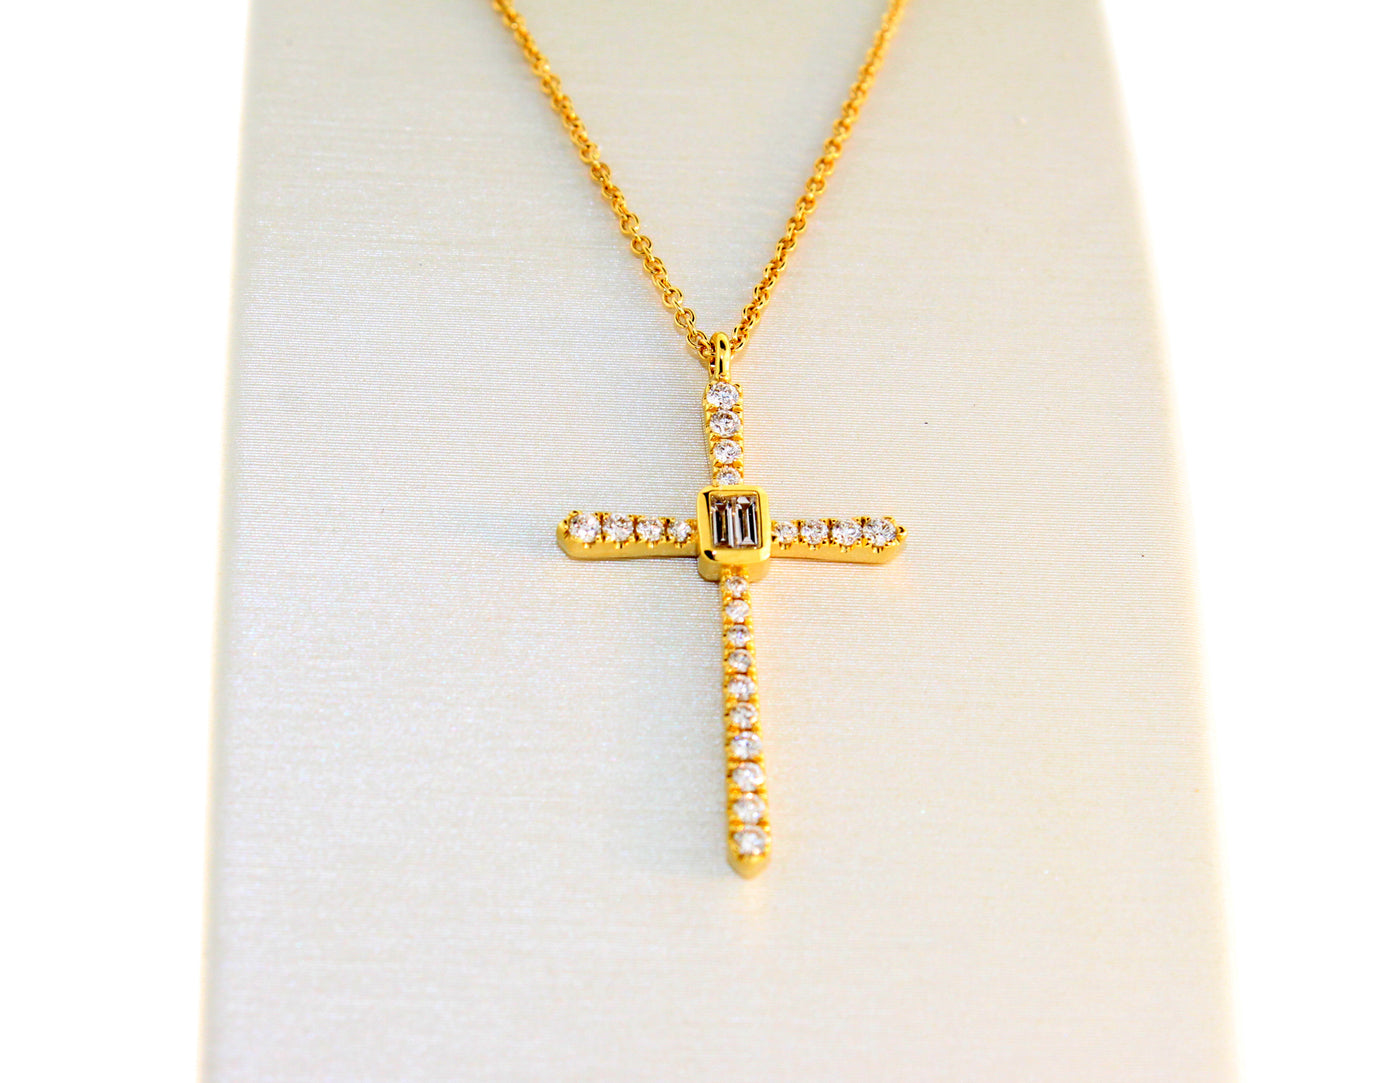 18KW Diamond Cross Necklace